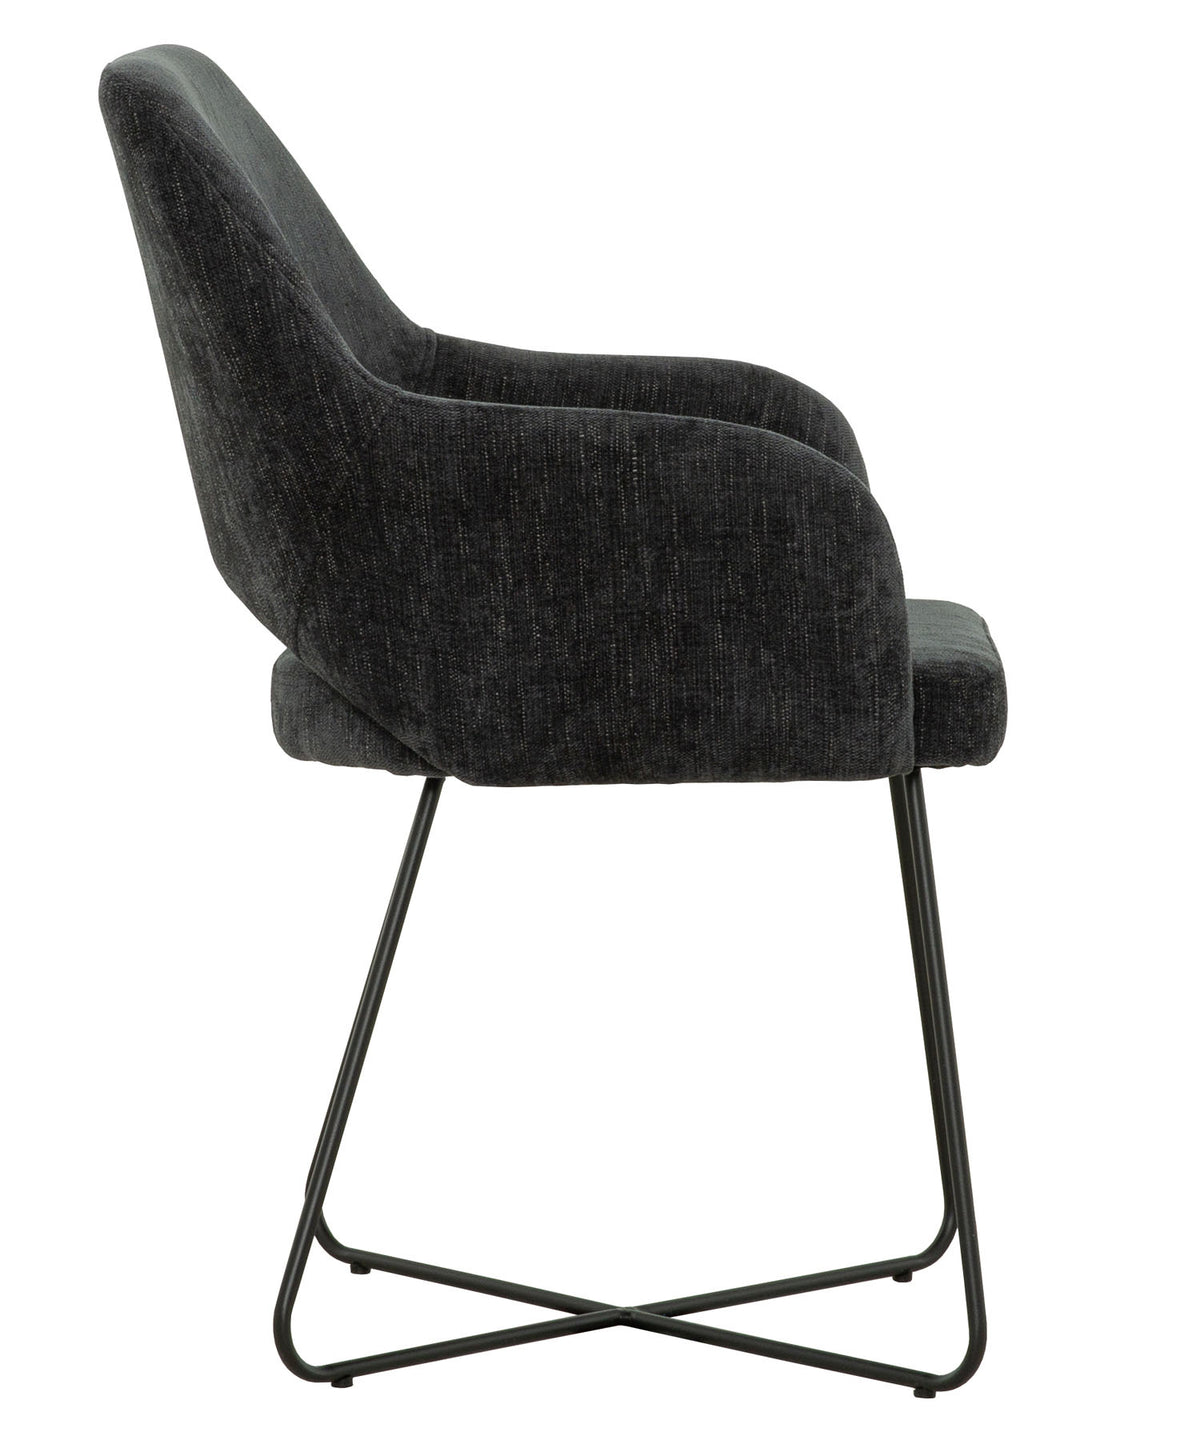 Willa Black Dining Chair - MJM Furniture